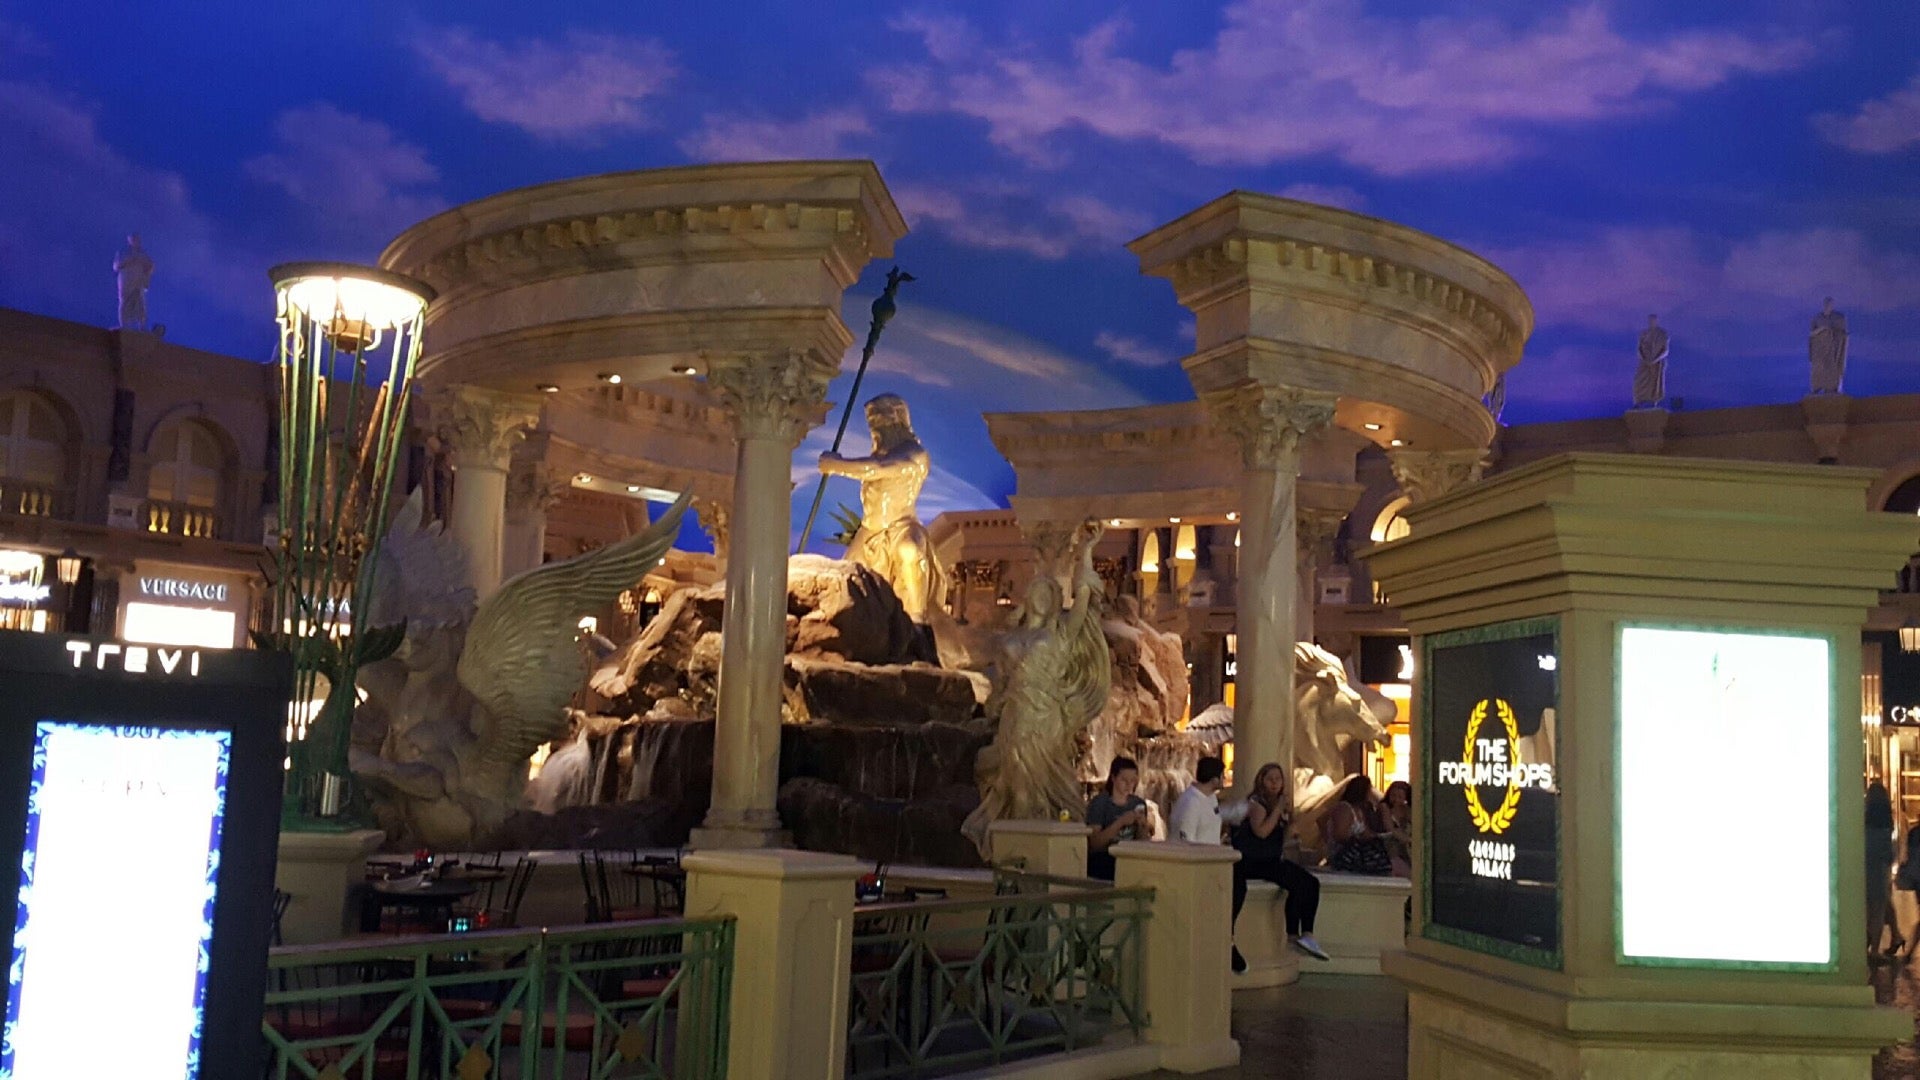 Fountain Of God Inside The Forum Shops @ Caesars Palace Las Vegas